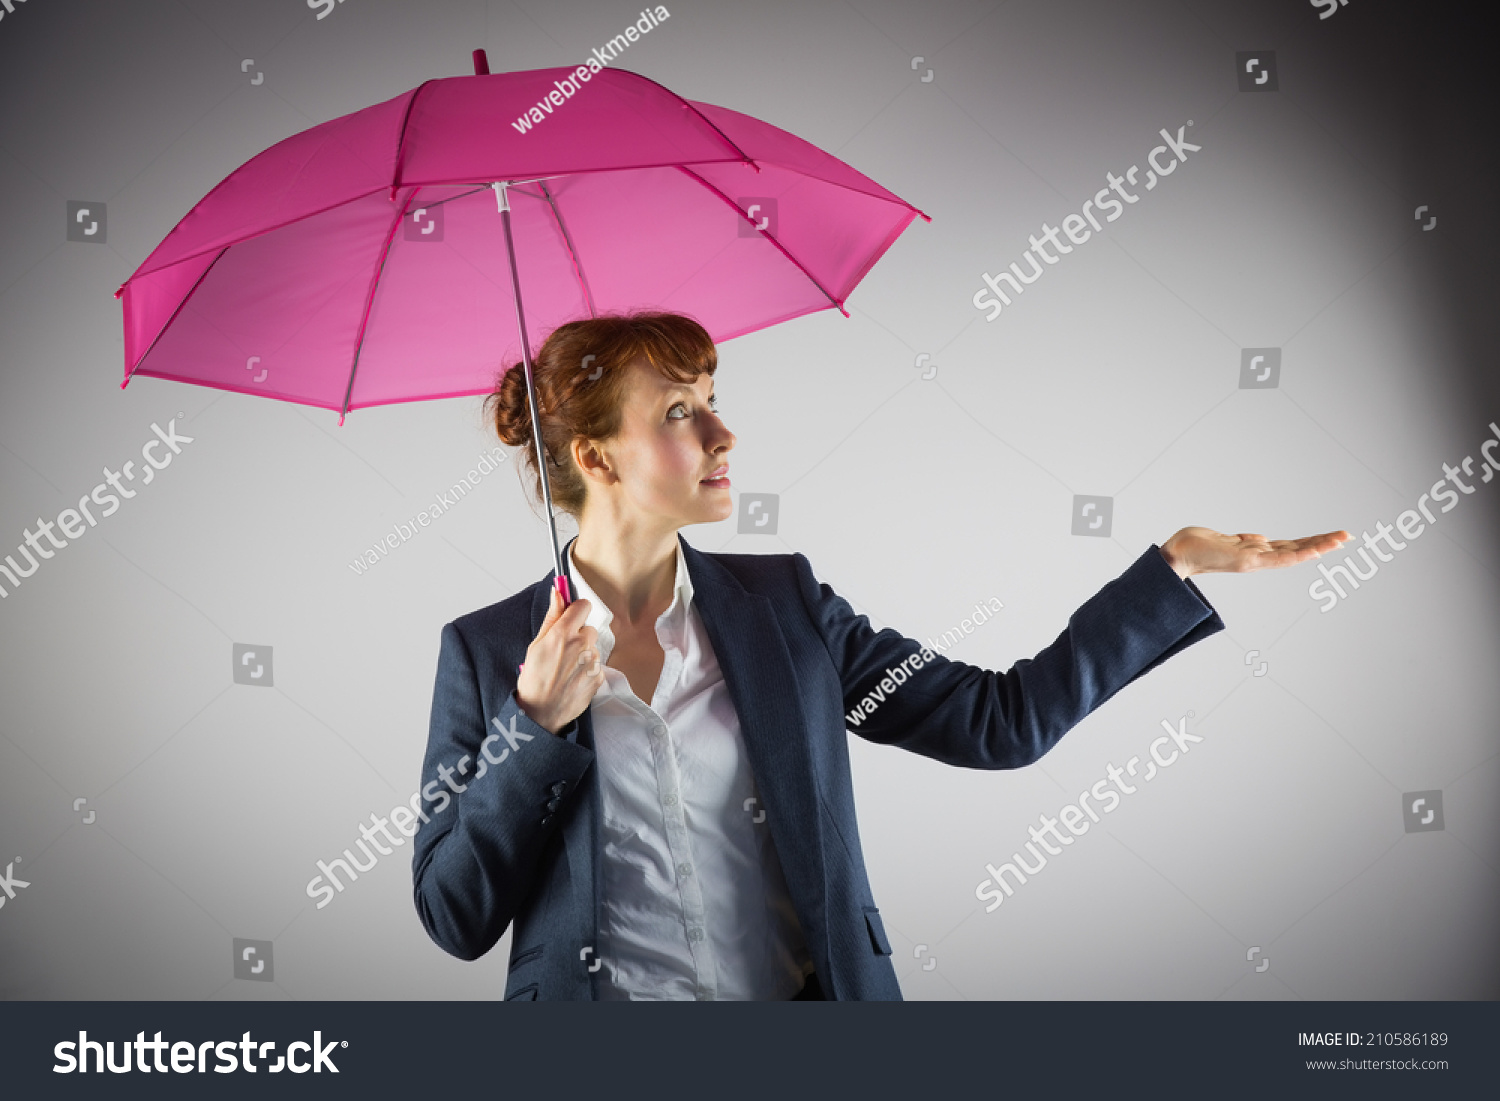 Smiling businesswoman holding pink umbrella on grey background #210586189